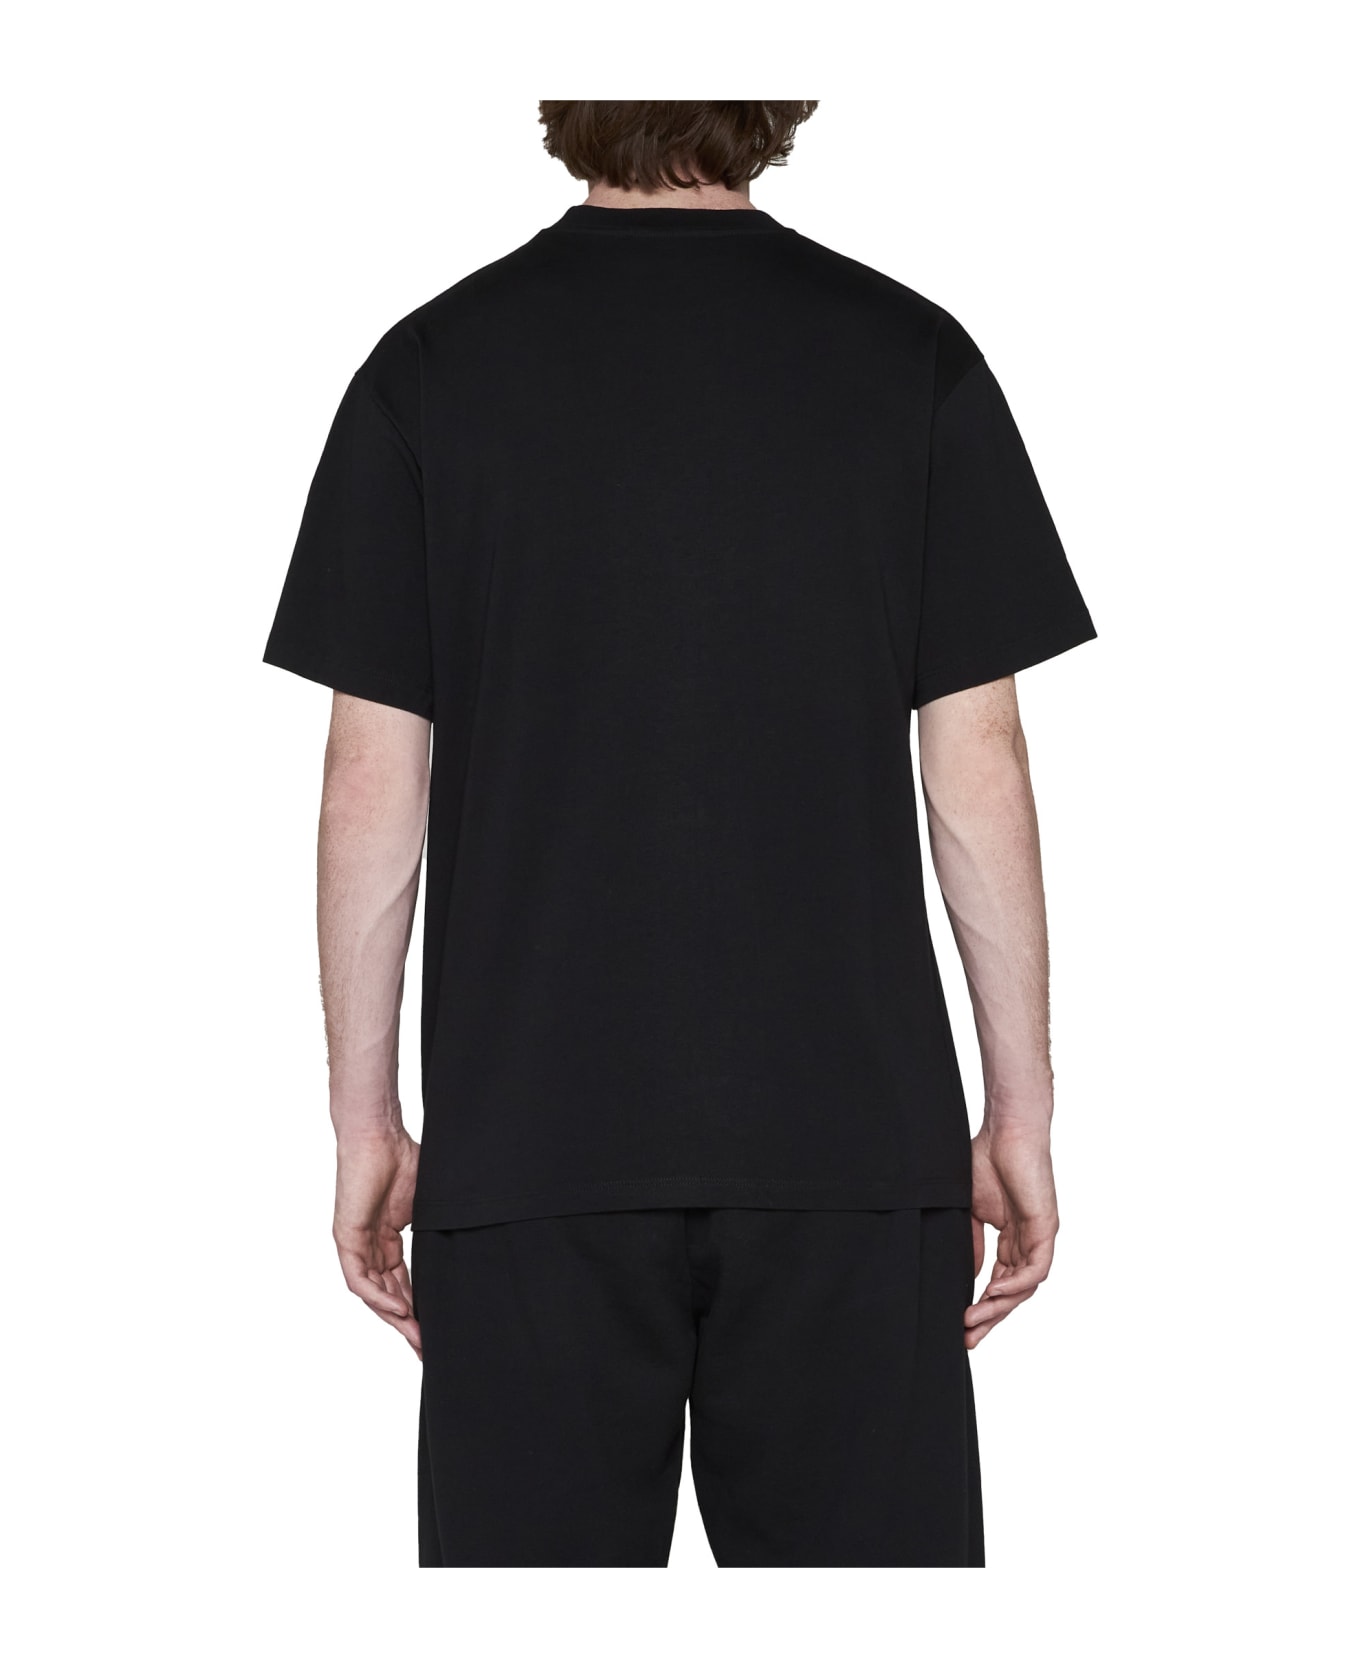 Aries T-Shirt - Black